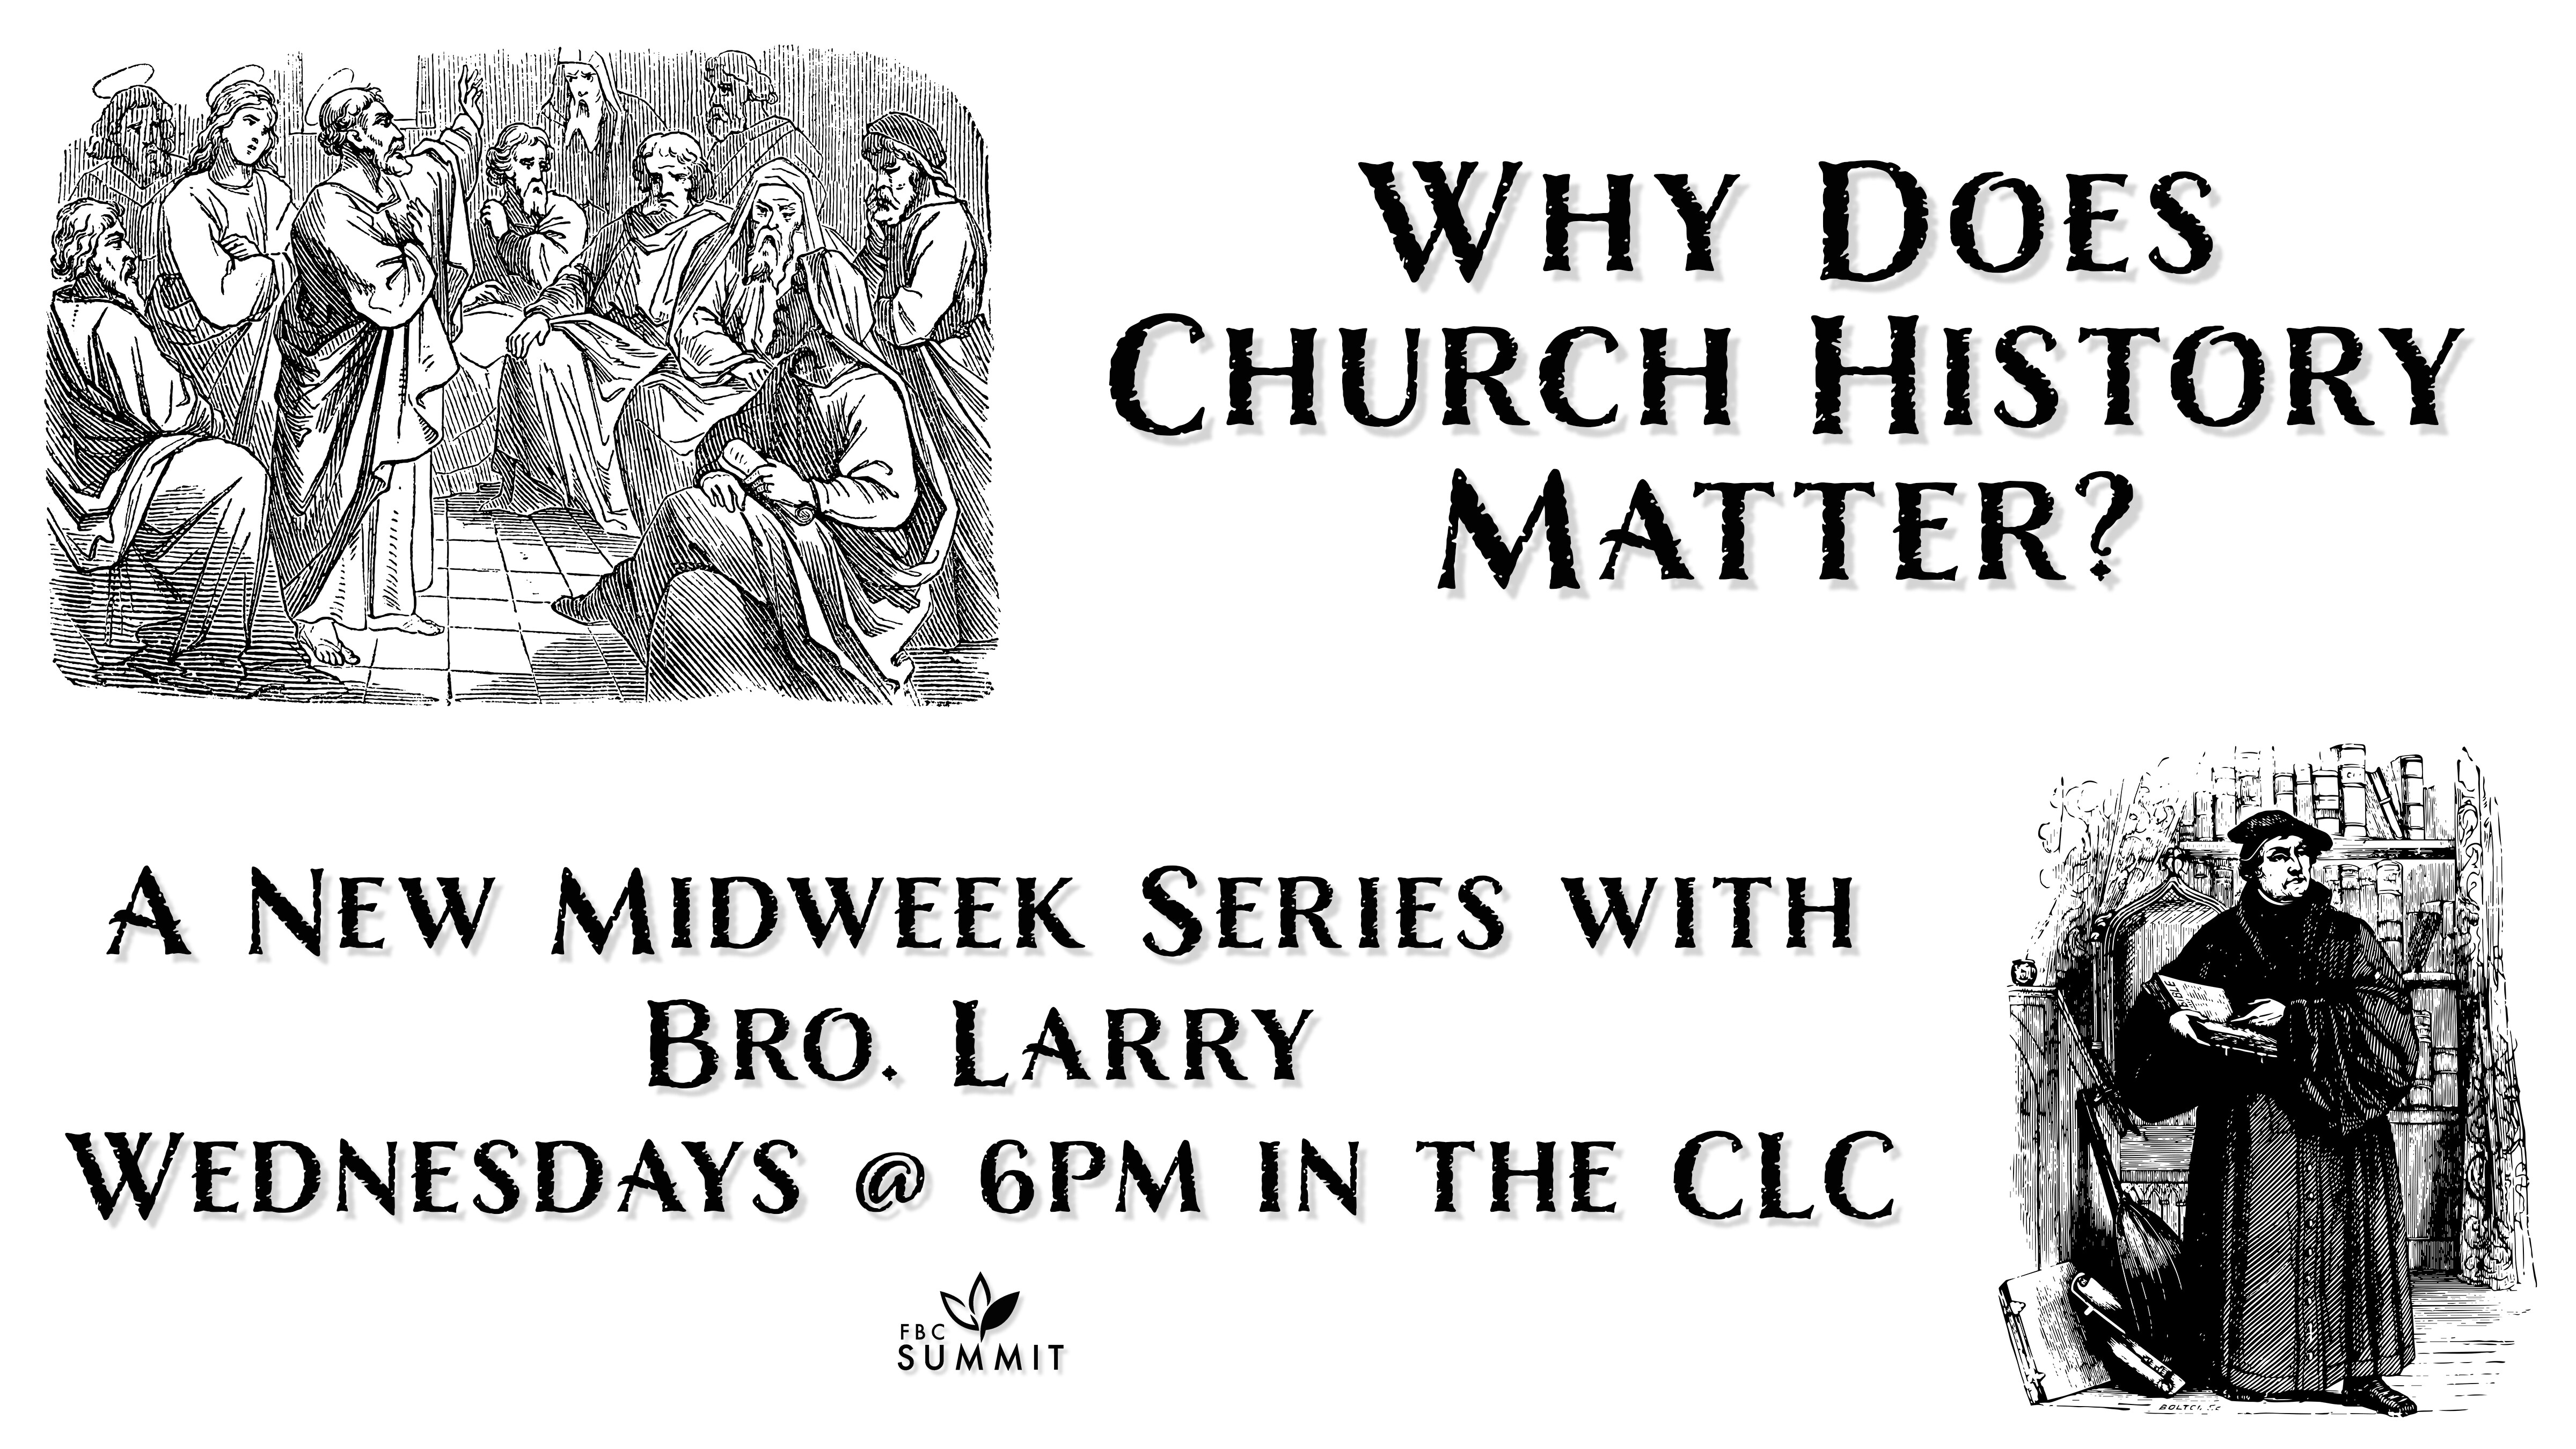 Midweek Bible Study: "Church History 101: The 7th & 8th Centuries" // Dr. Larry LeBlanc